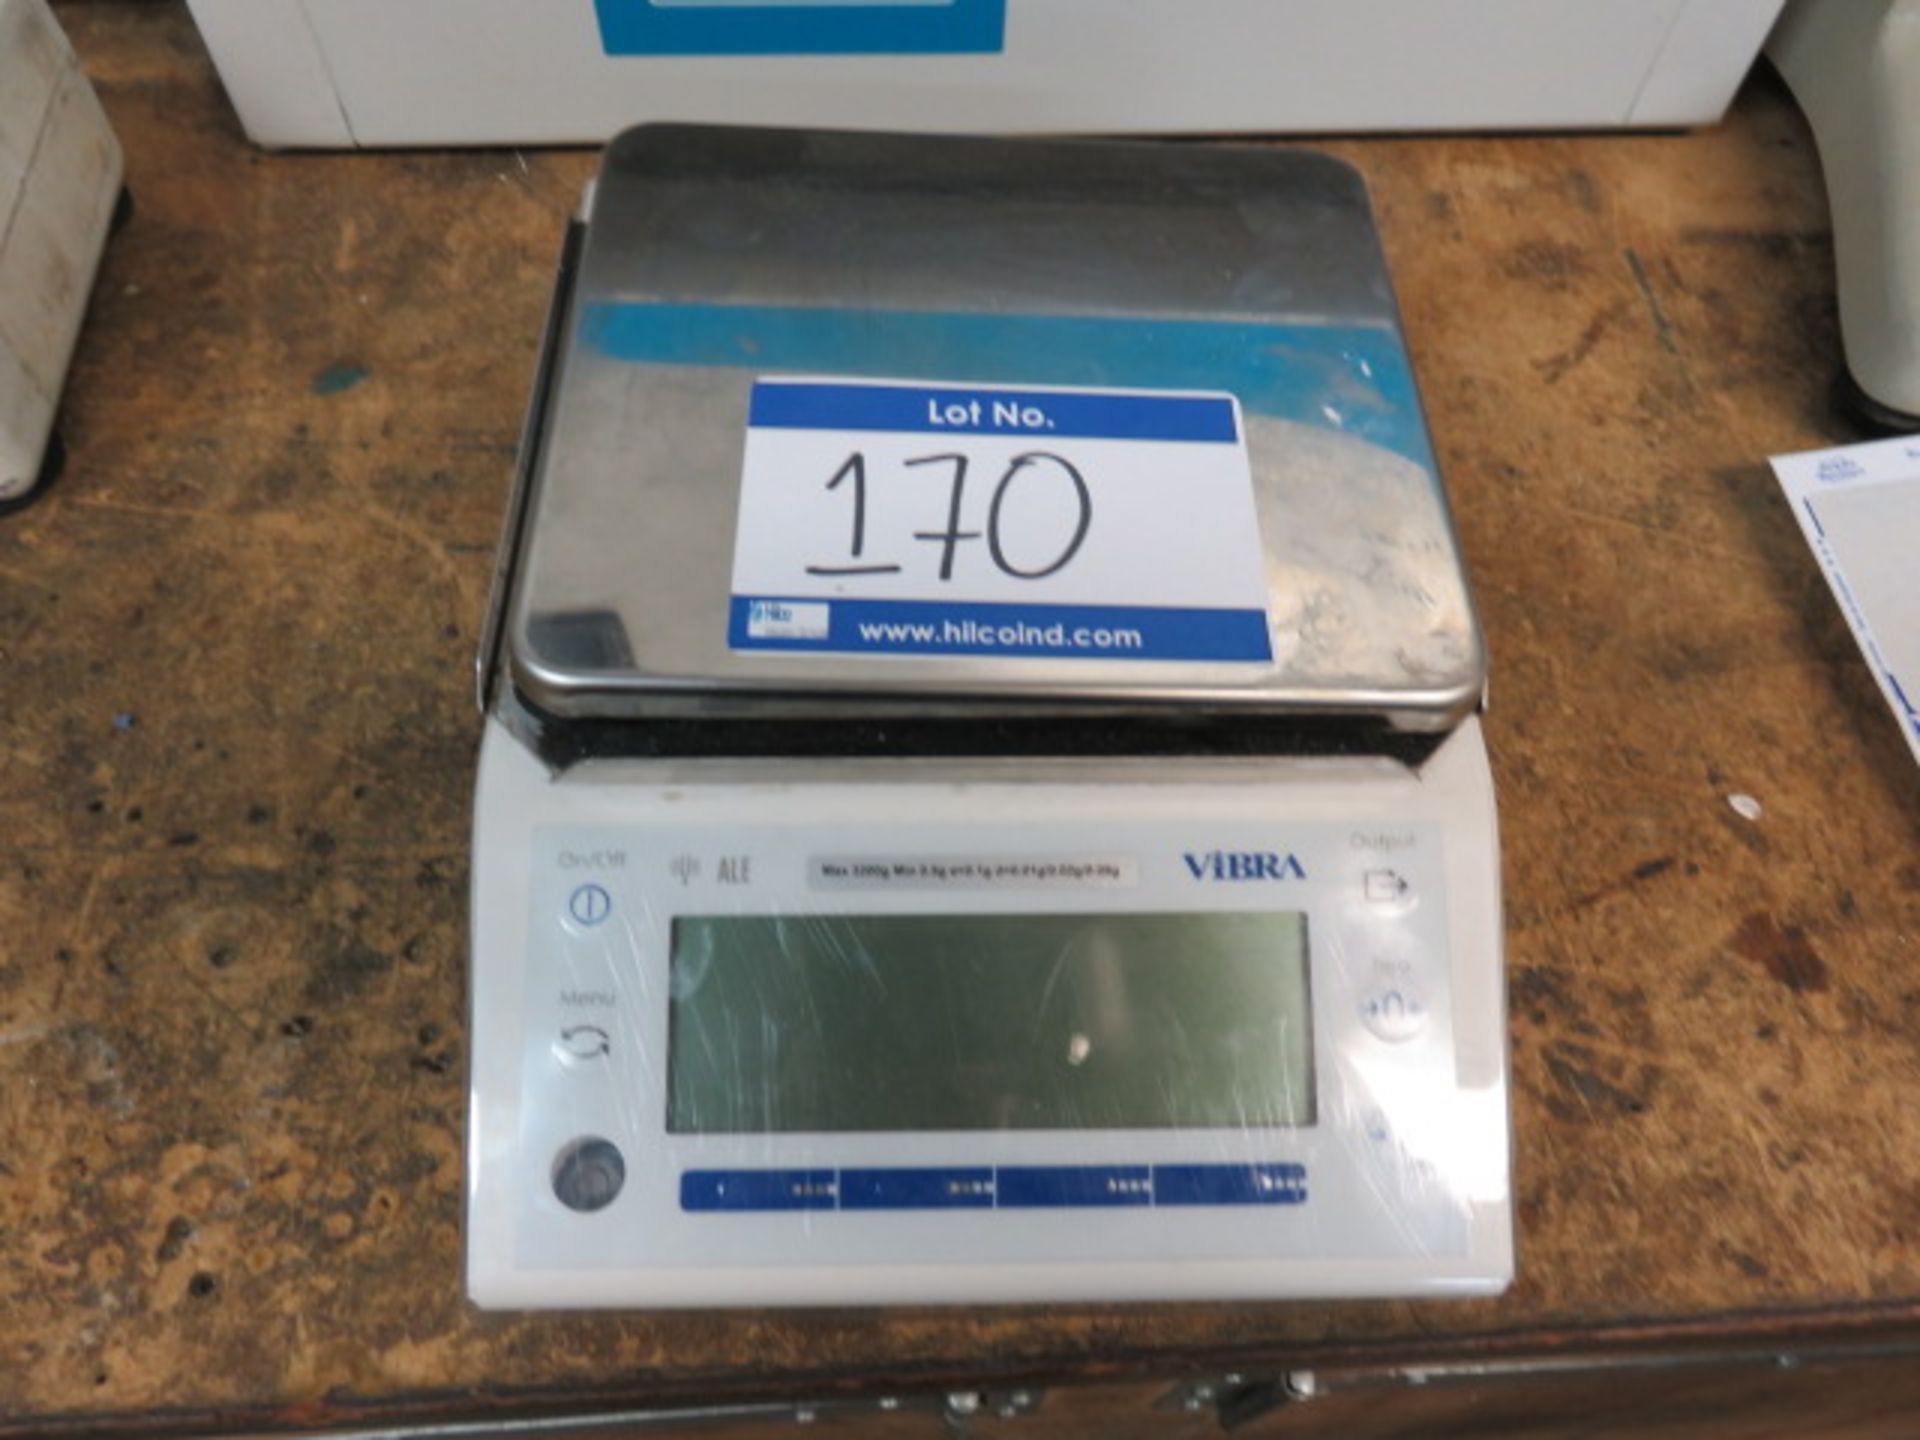 Shinko Denshi Co td ALE3202 Digital Weigh Scale  Serial No. 180313004 with Max 3200g, Min 0.5g